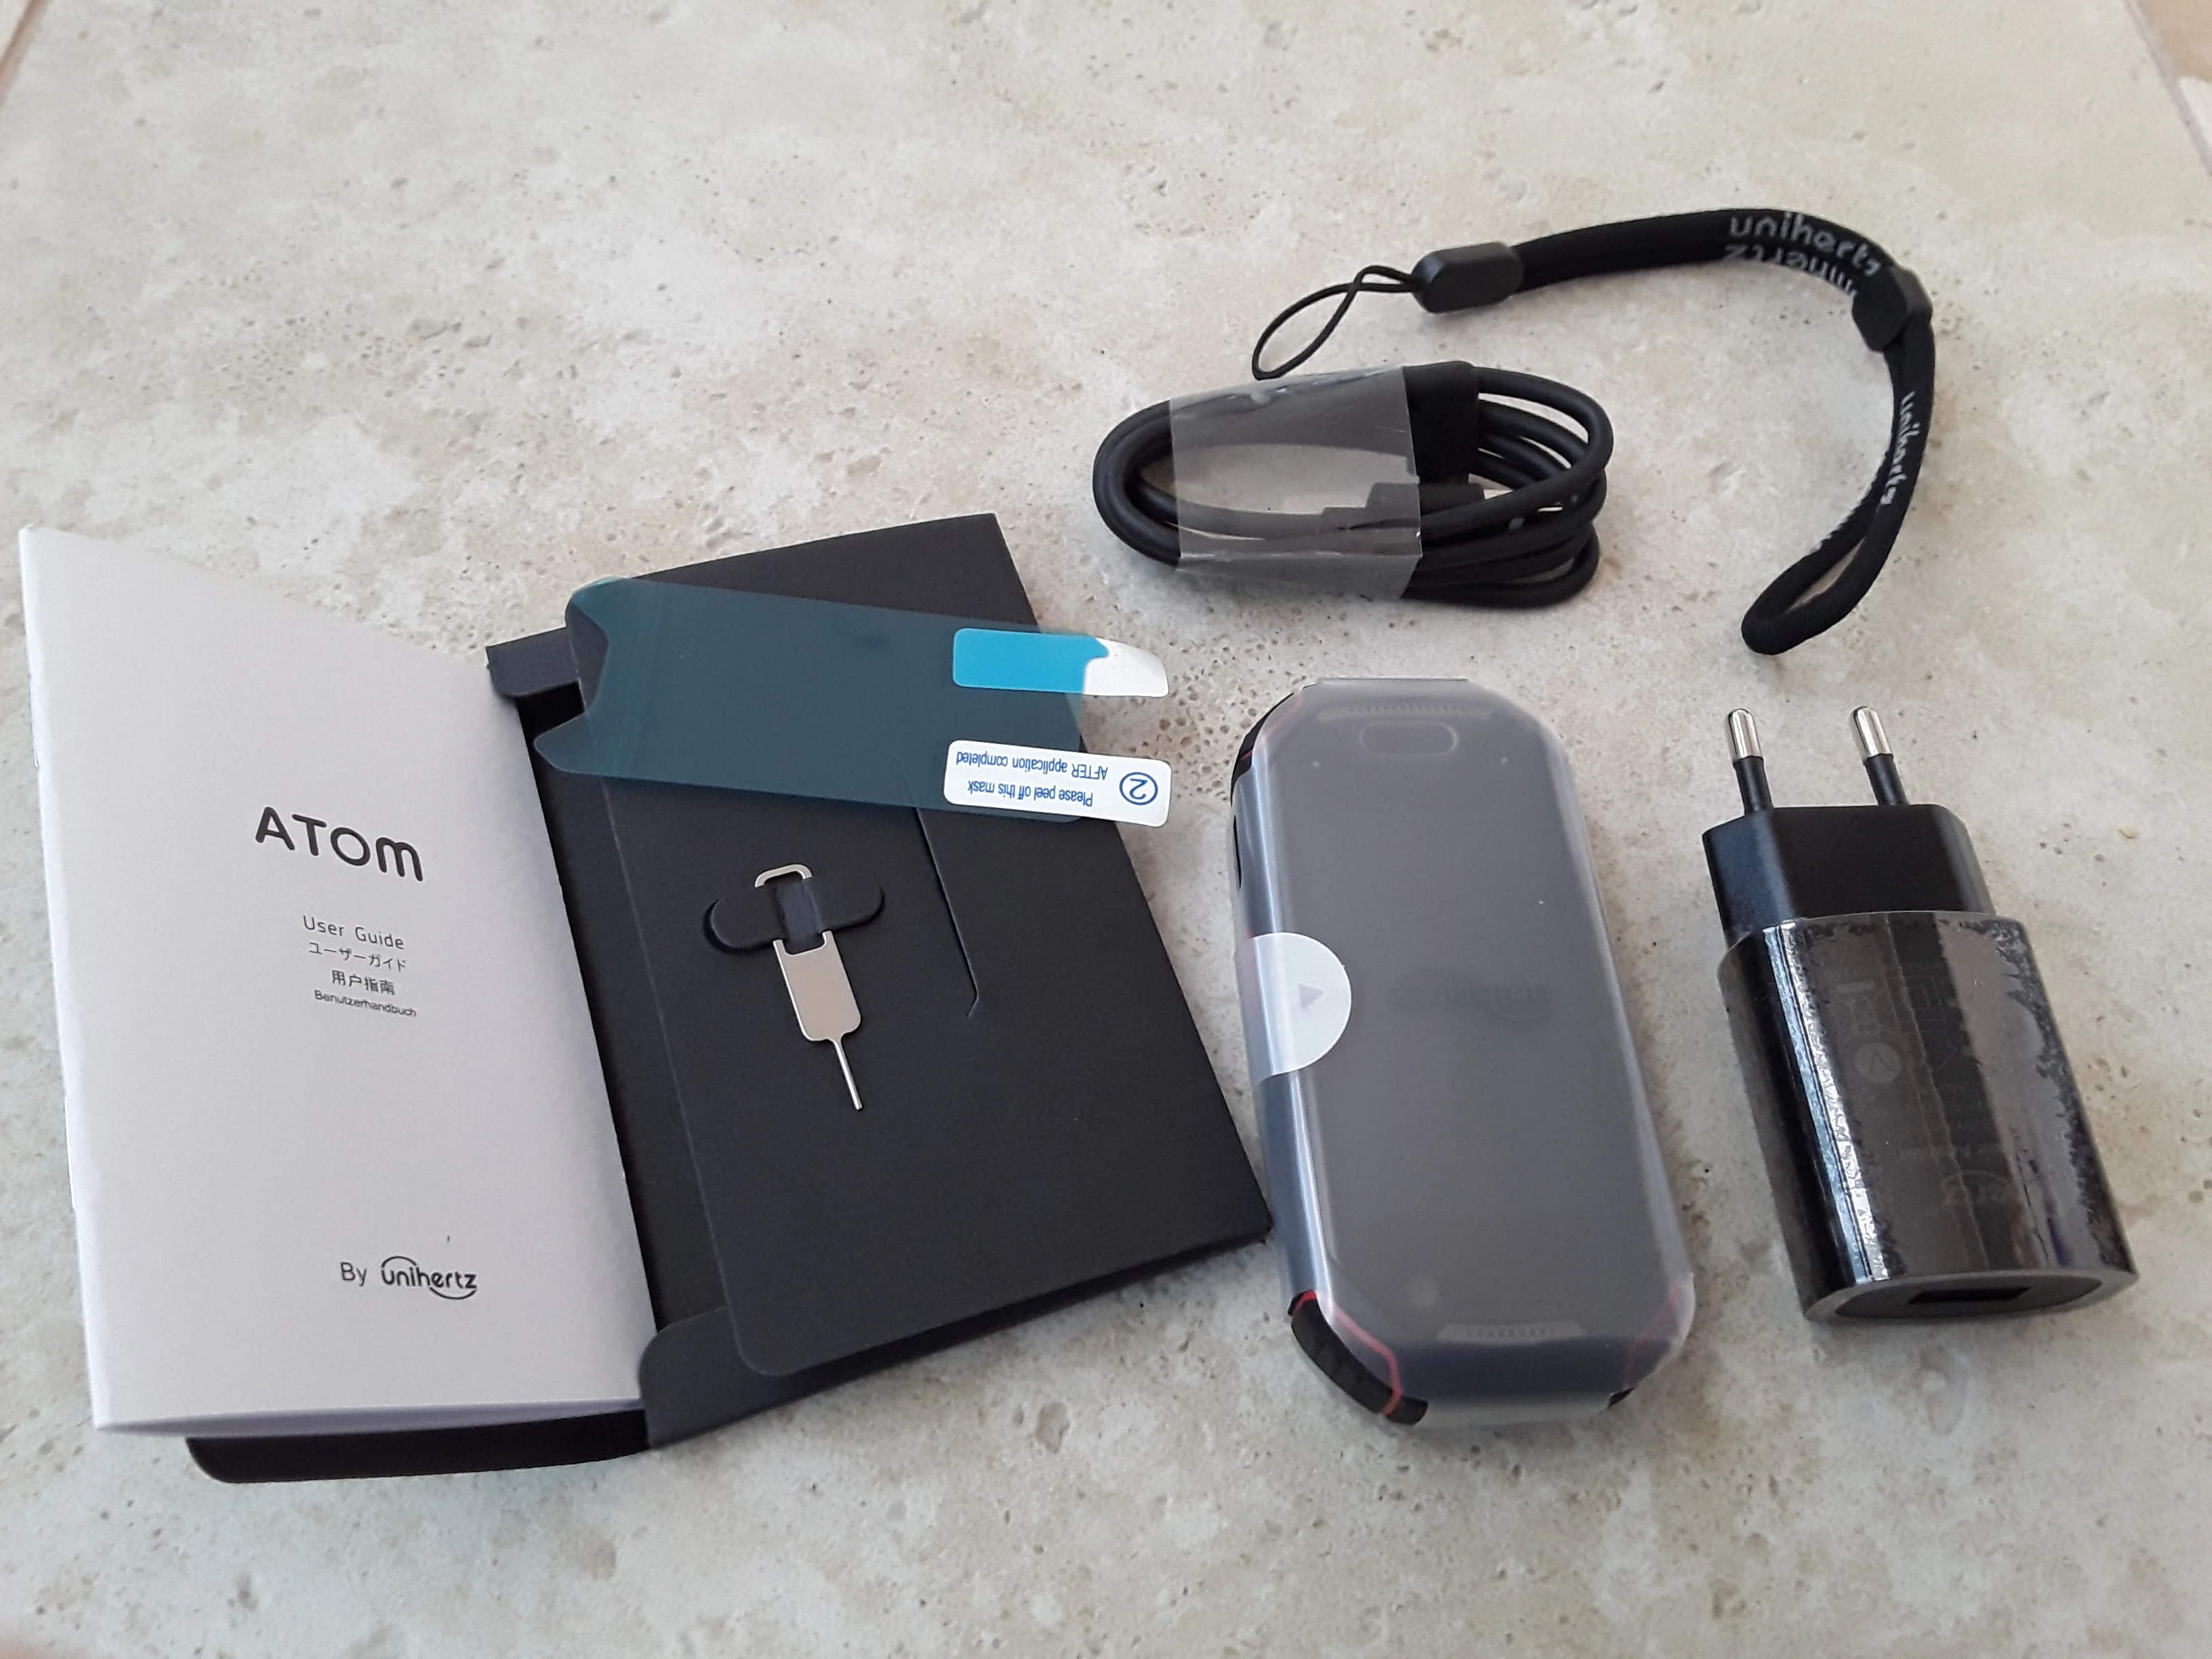 SERVO S10 Pro IP68 Waterproof mini Smartphone MTK6737 3GB 64GB NFC Walkie  talkie Rugged Phone 13MP Fingerprint Face Recognition